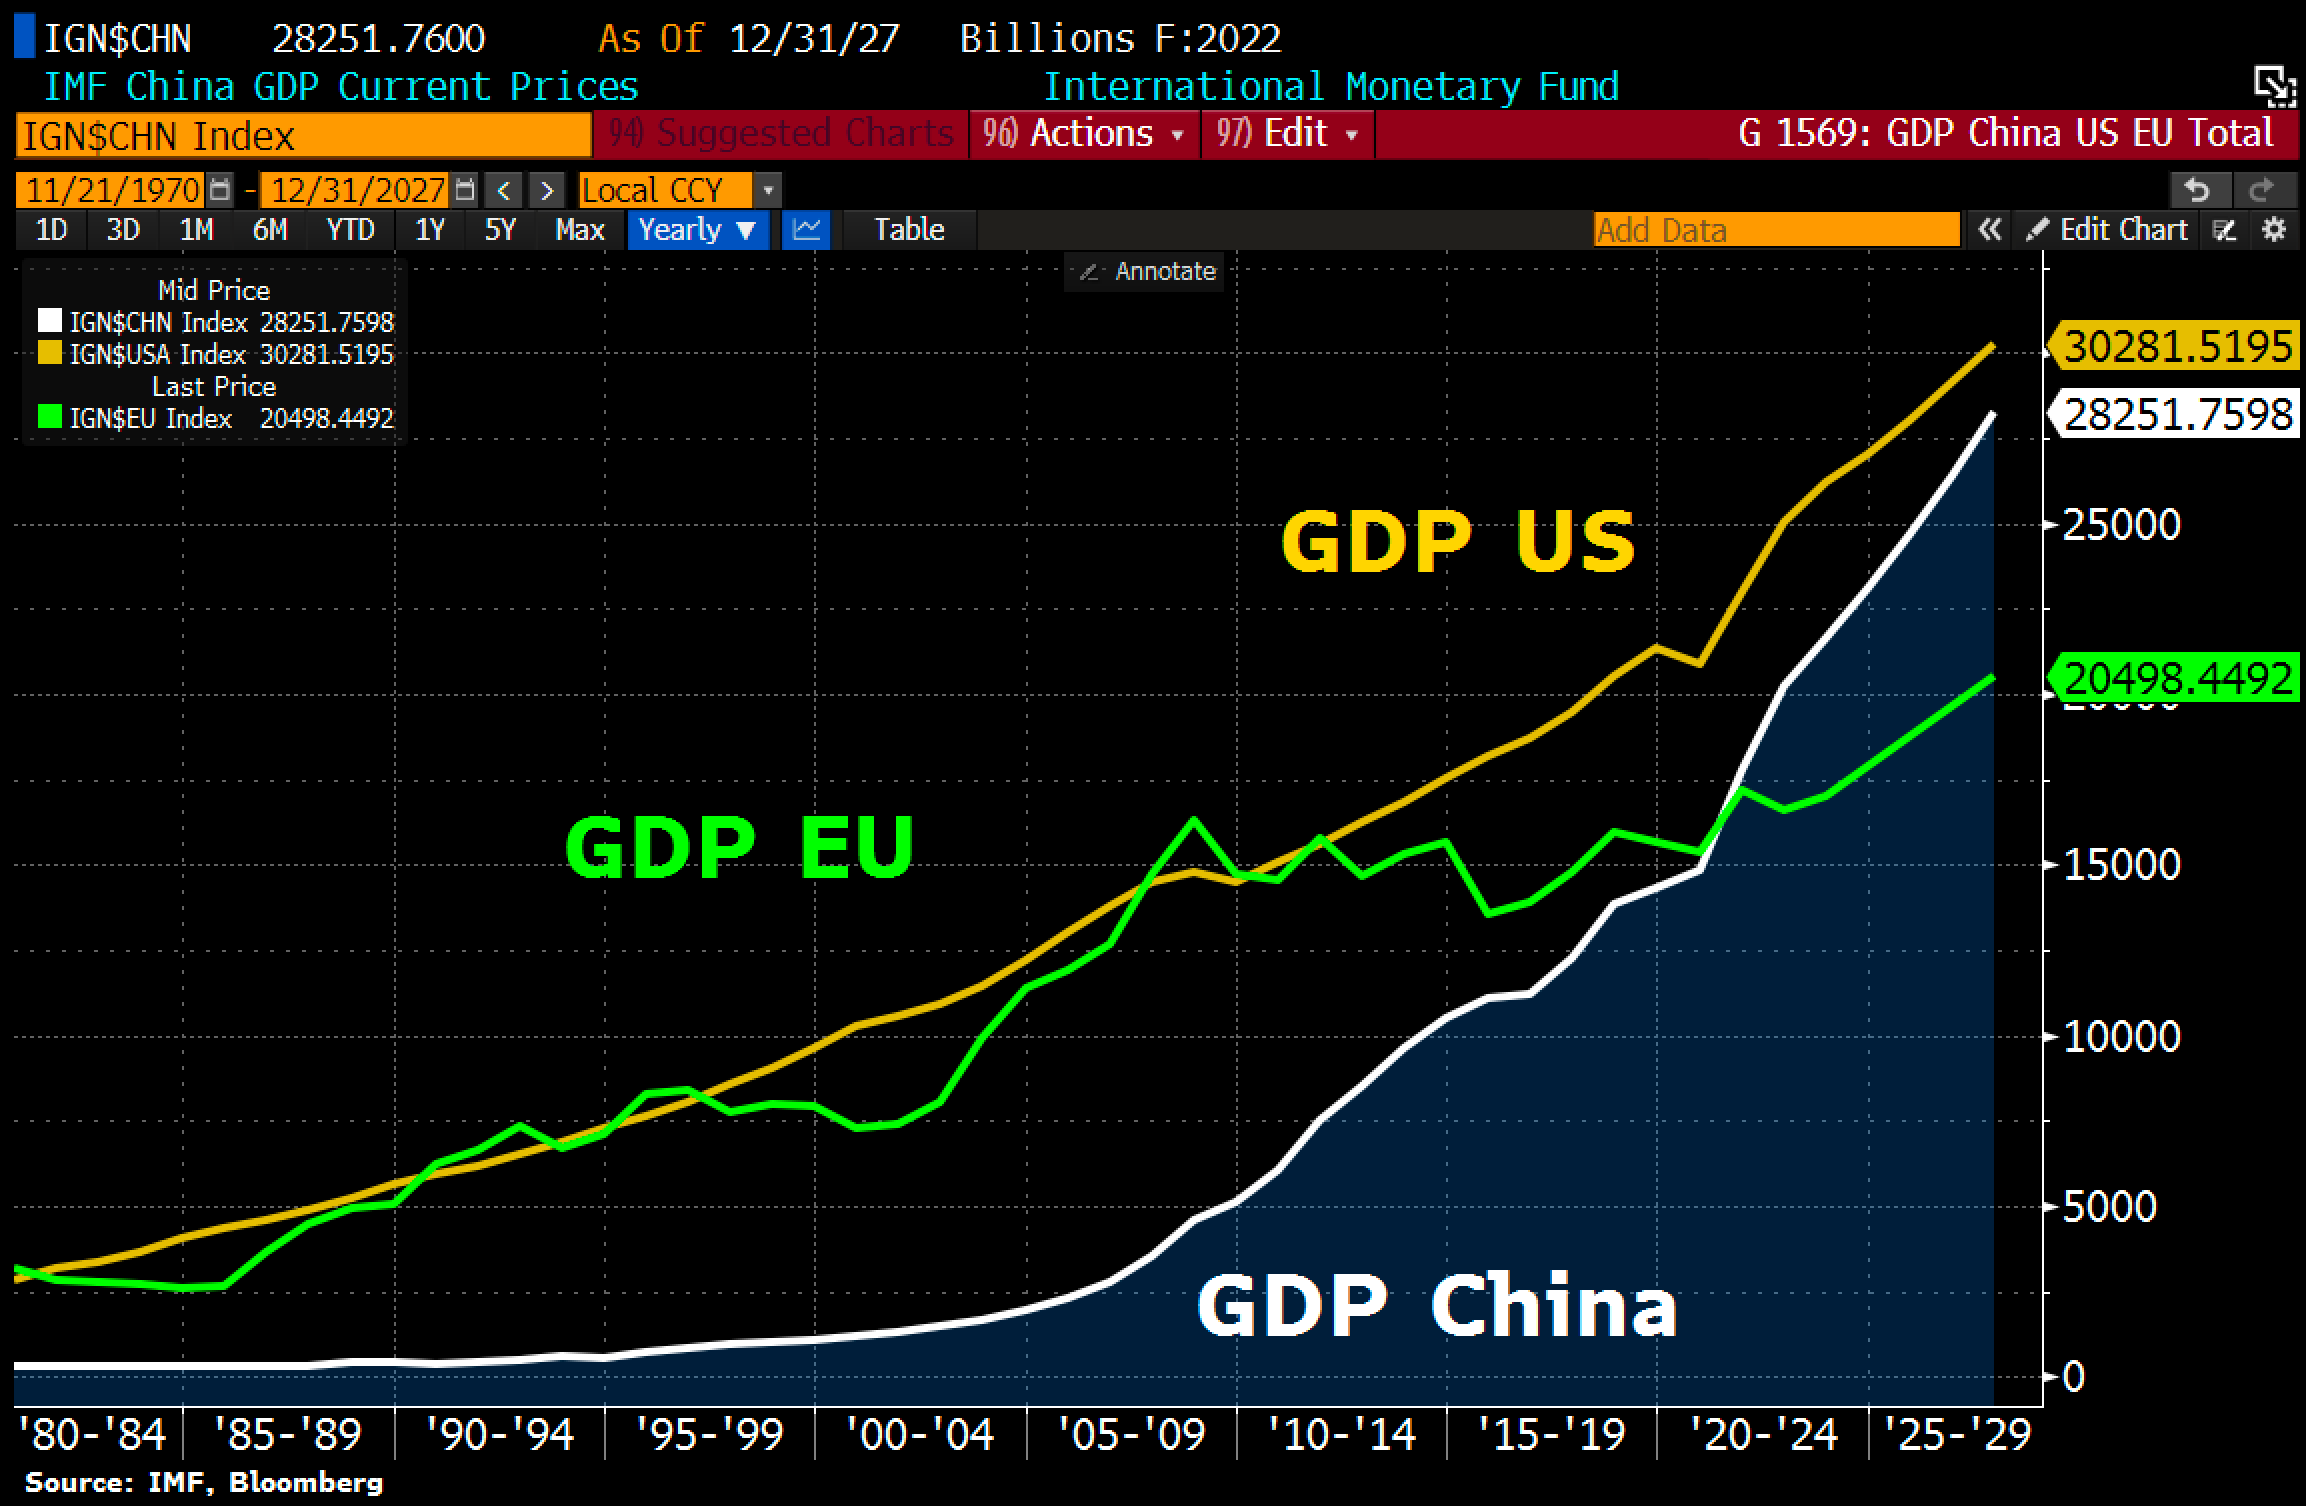 US, China and EU GDP over time